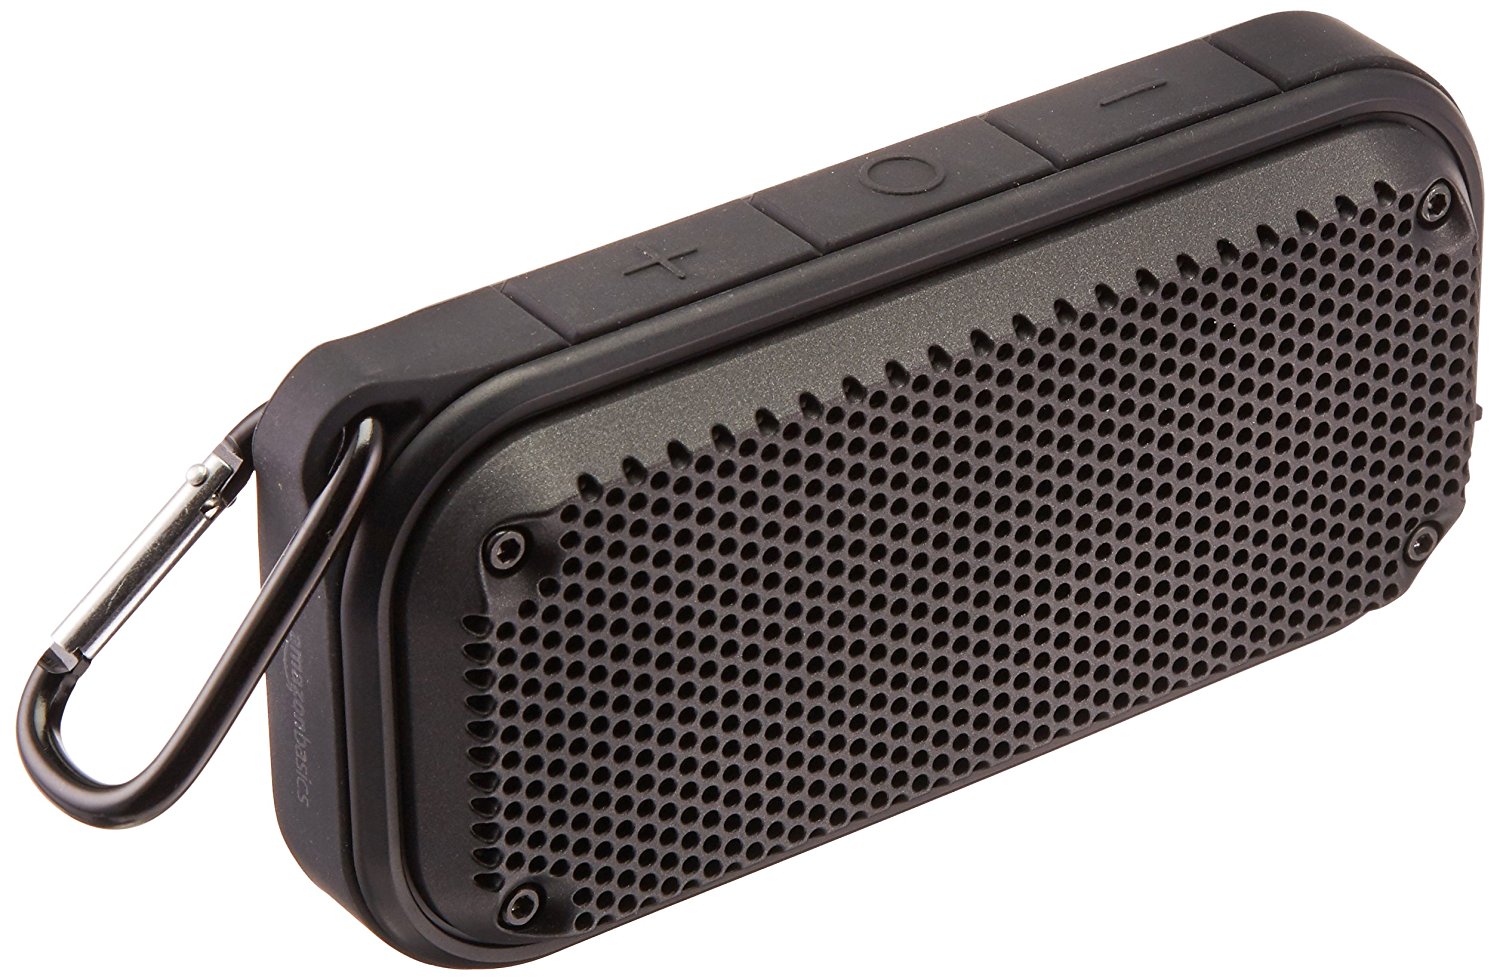 Price drop! AmazonBasics shockproof and waterproof Bluetooth speaker for $11